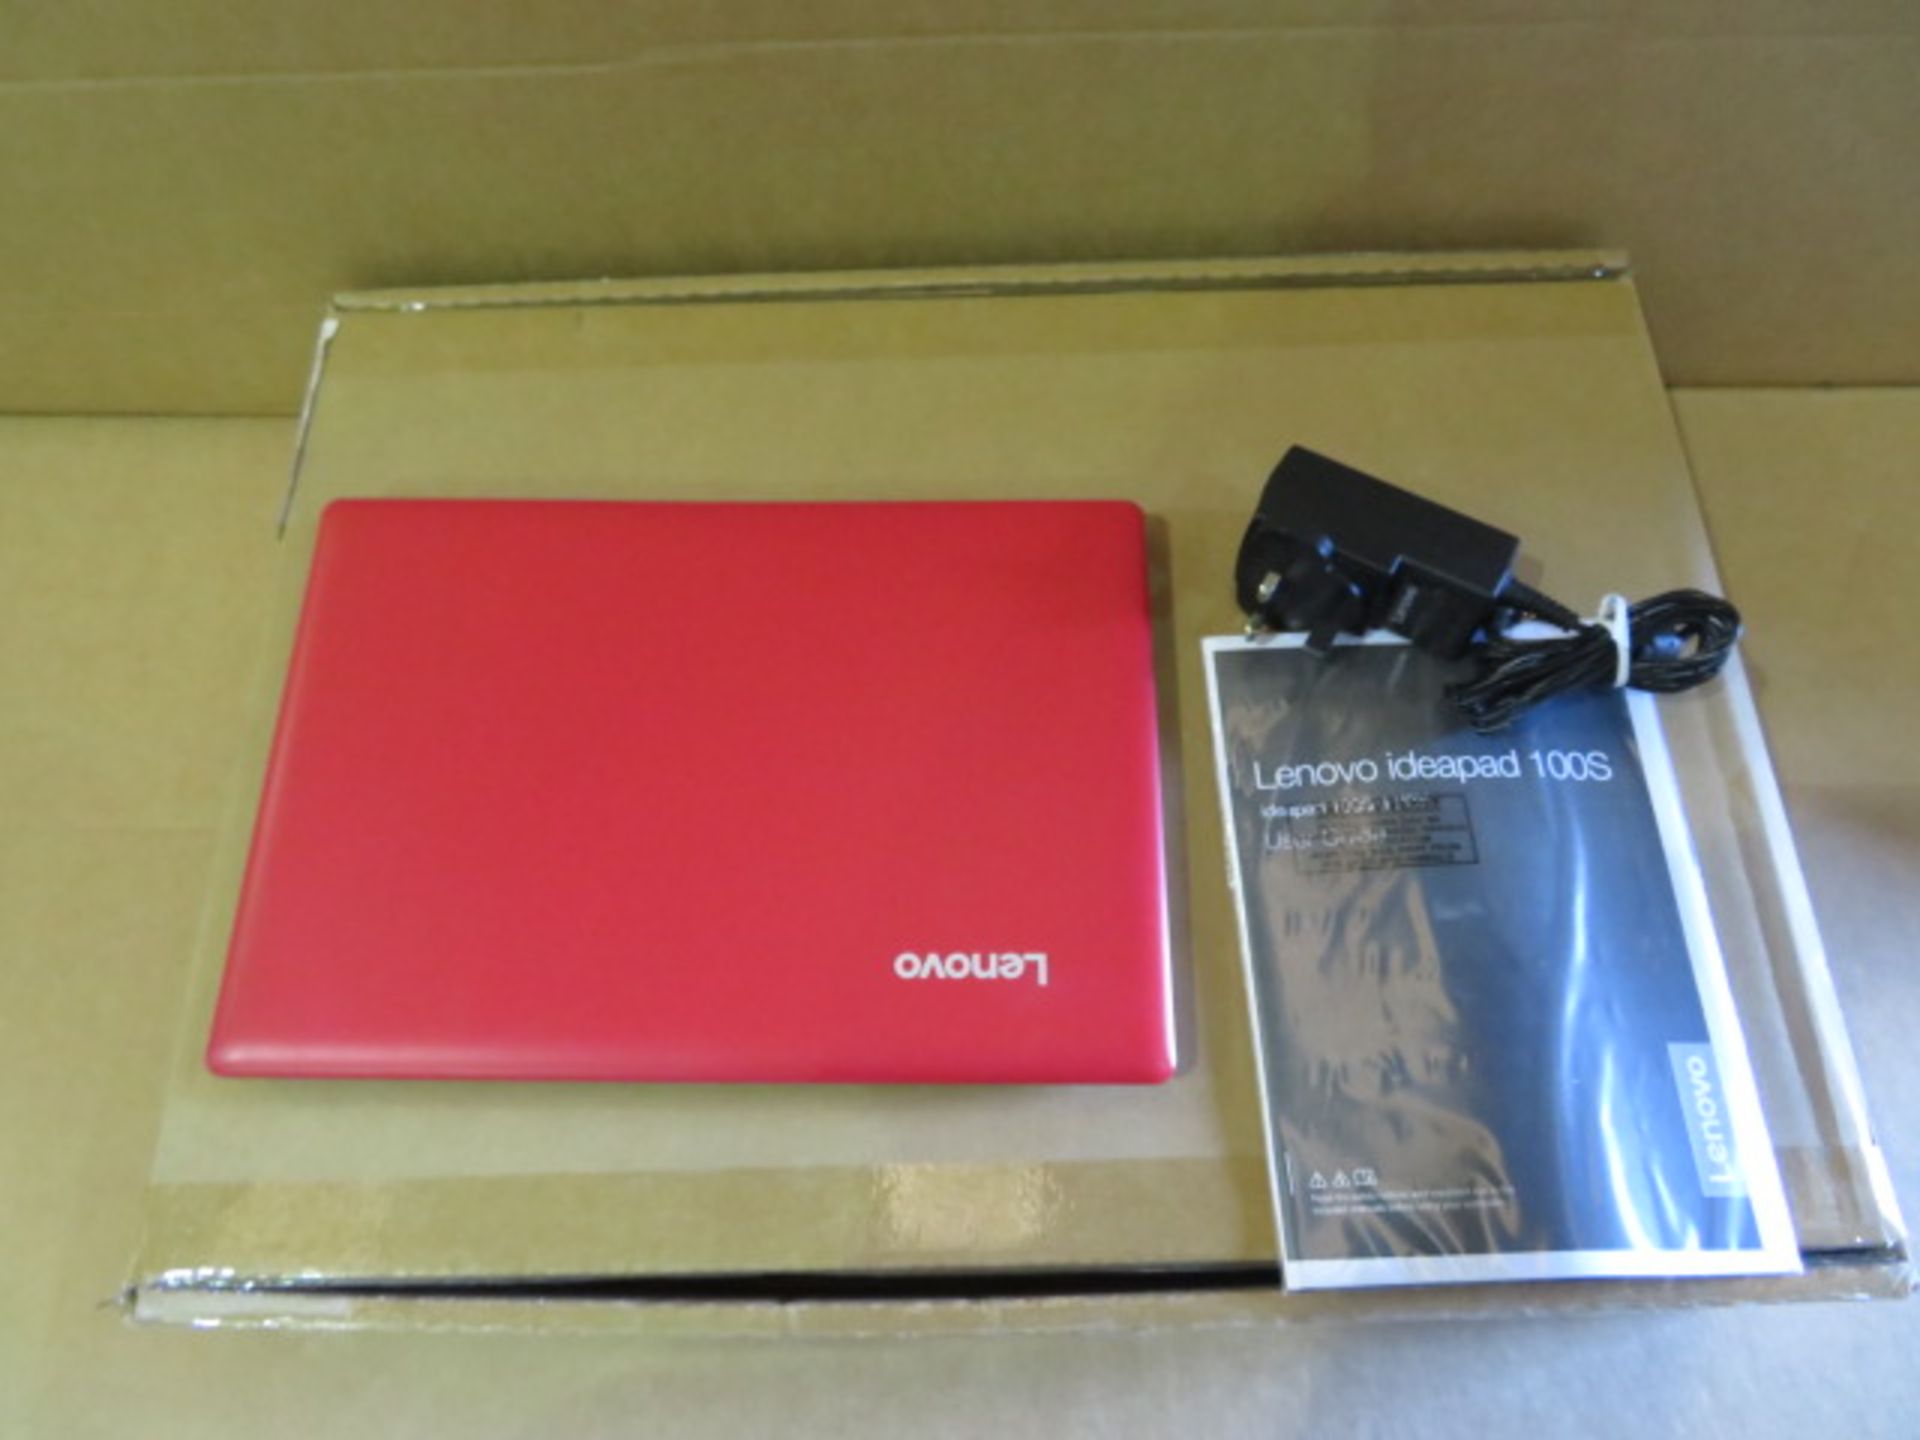 (23) 1 x Grade B - Lenovo Ideapad 110 RED 11.6" Laptop Intel Celeron N3060, 2GB RAM, 32GB - Image 2 of 4